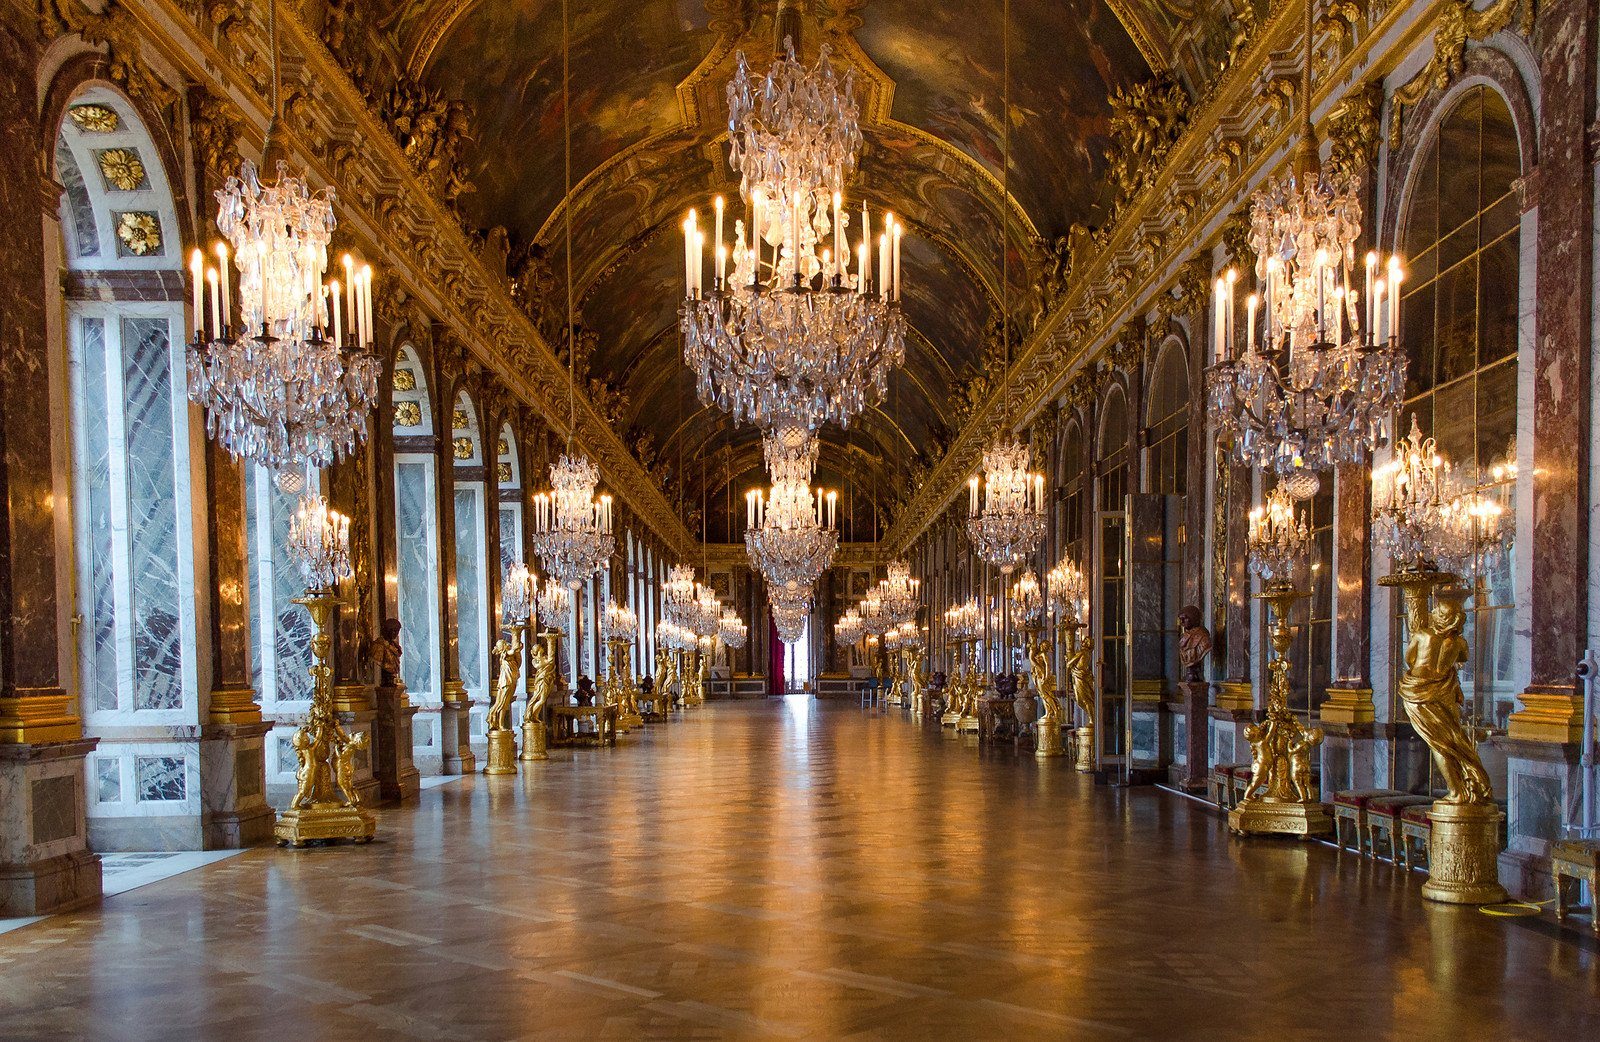 Hall o. Версальский дворец внутри. Версальский дворец внутри зеркальная галерея. Версальский дворец зал войны.